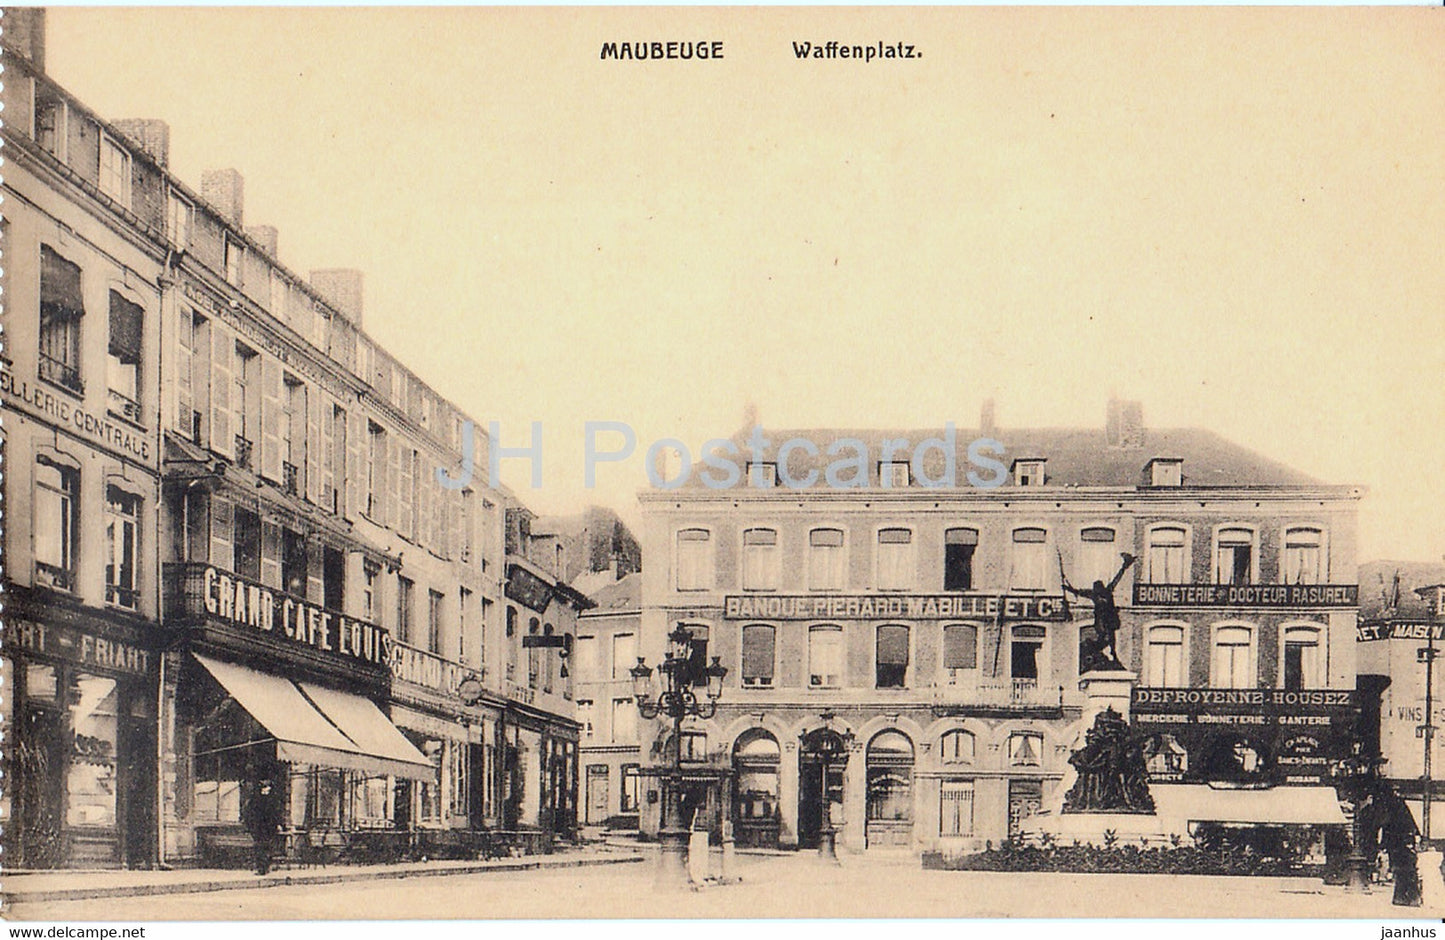 Maubeuge - Waffenplatz - cafe - Banque Pierard Mabille - old postcard - France - unused - JH Postcards